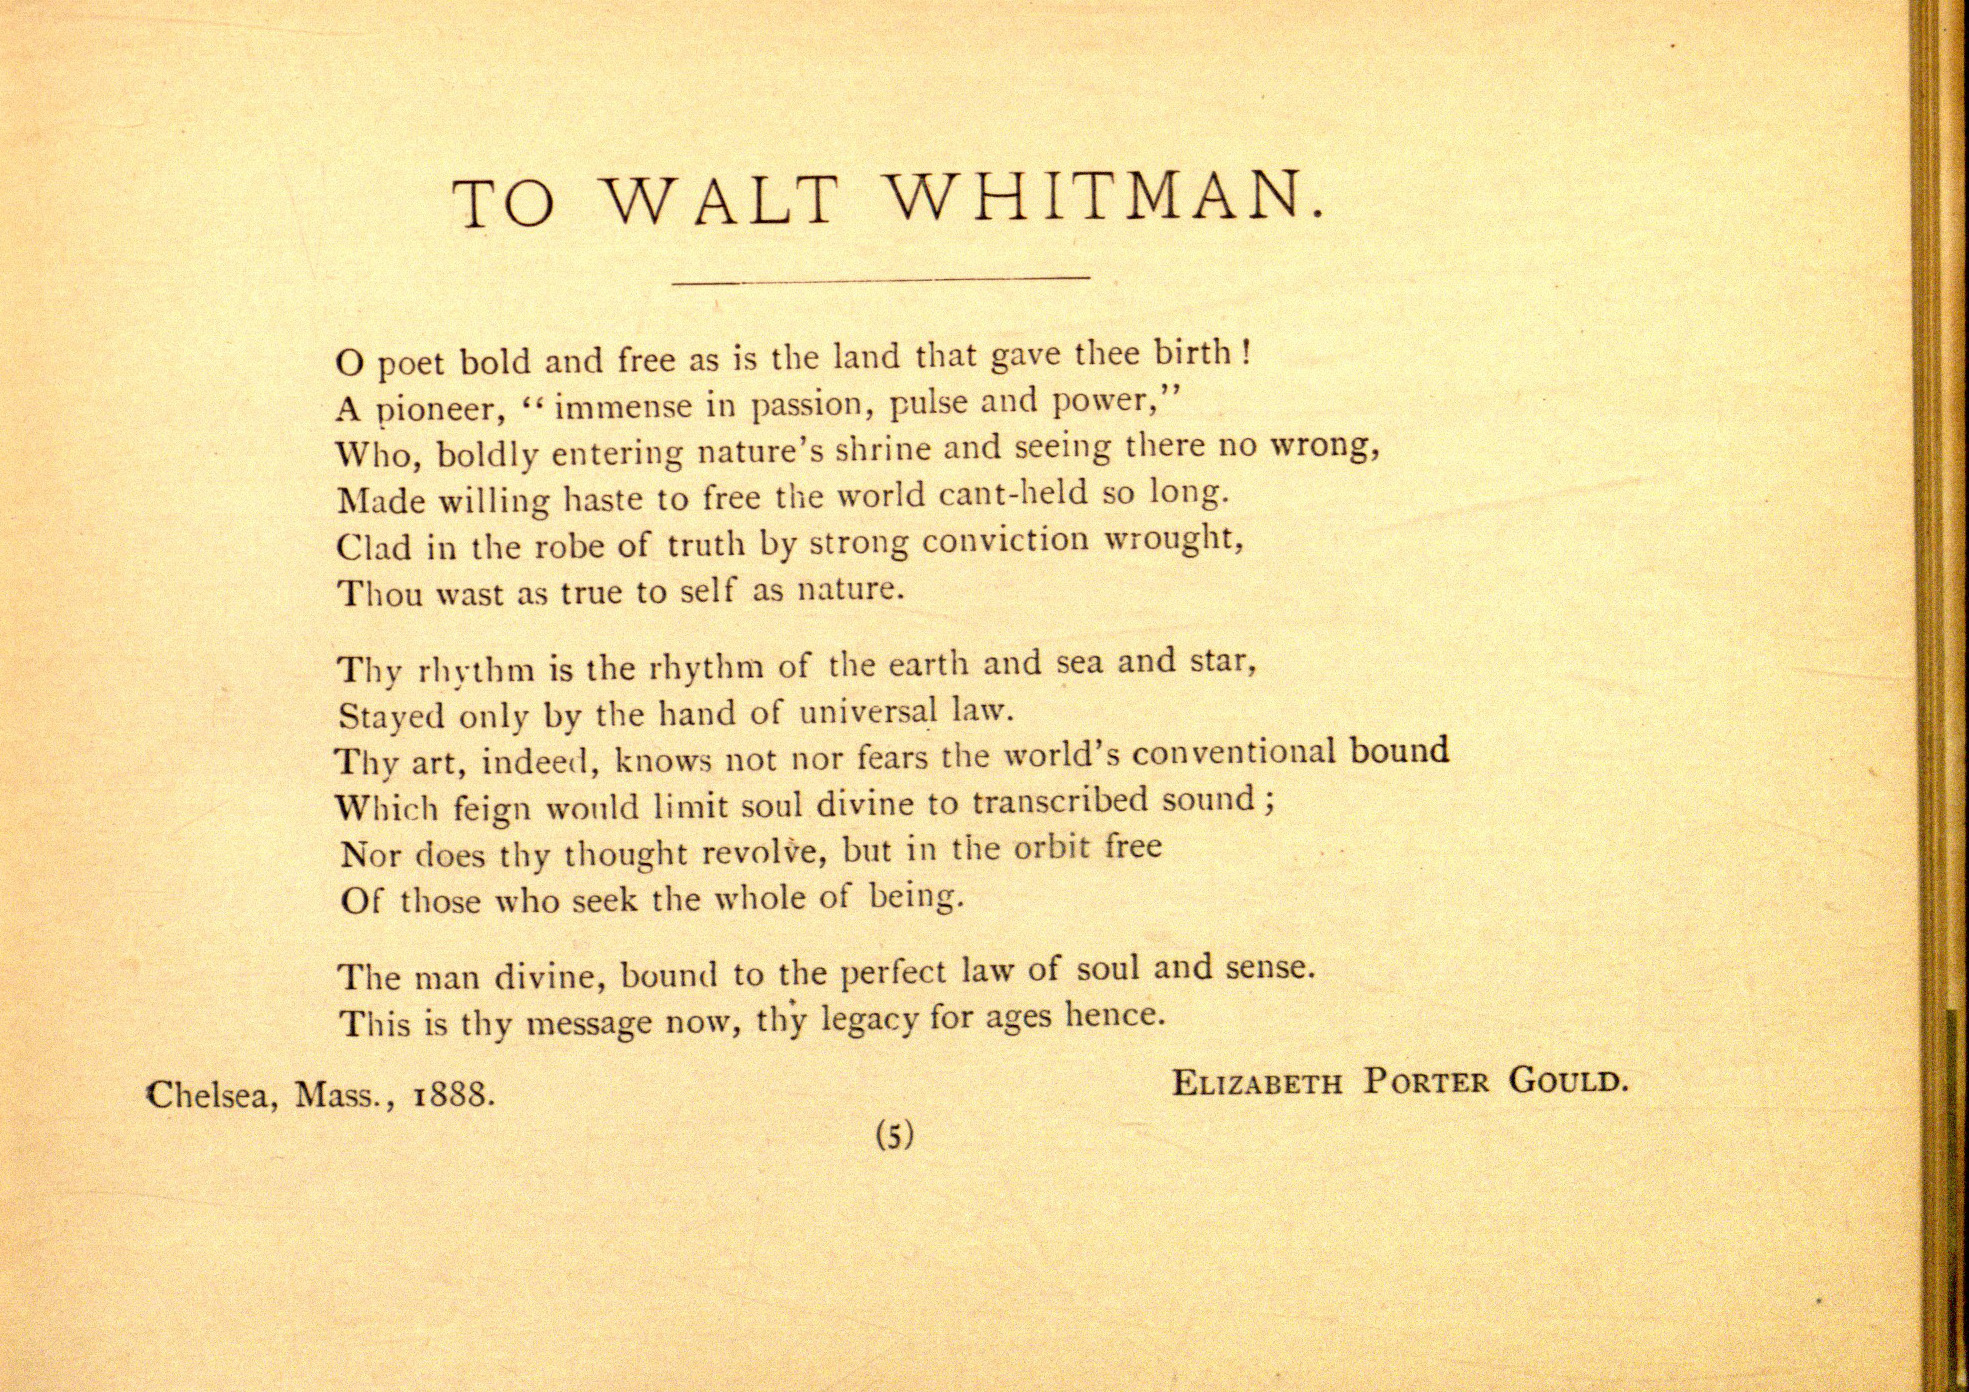 "To Walt Whitman" by Elizabeth Porter Gould